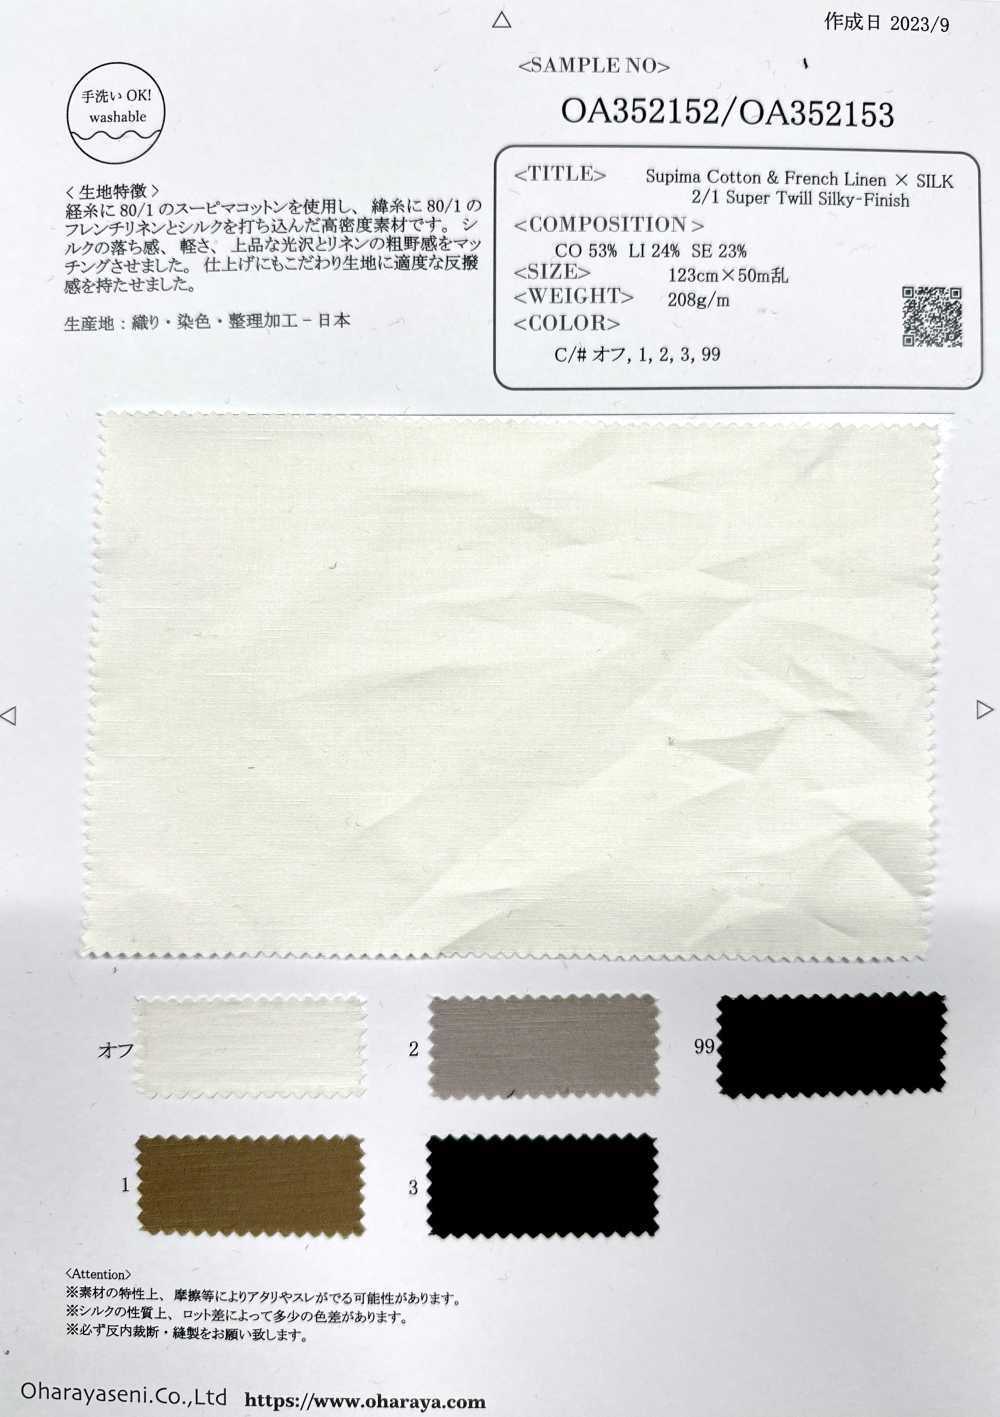 OA352152 蘇比馬棉 & 法國亞麻 × SILK 2/1 超斜紋絲光飾面[面料] 小原屋繊維